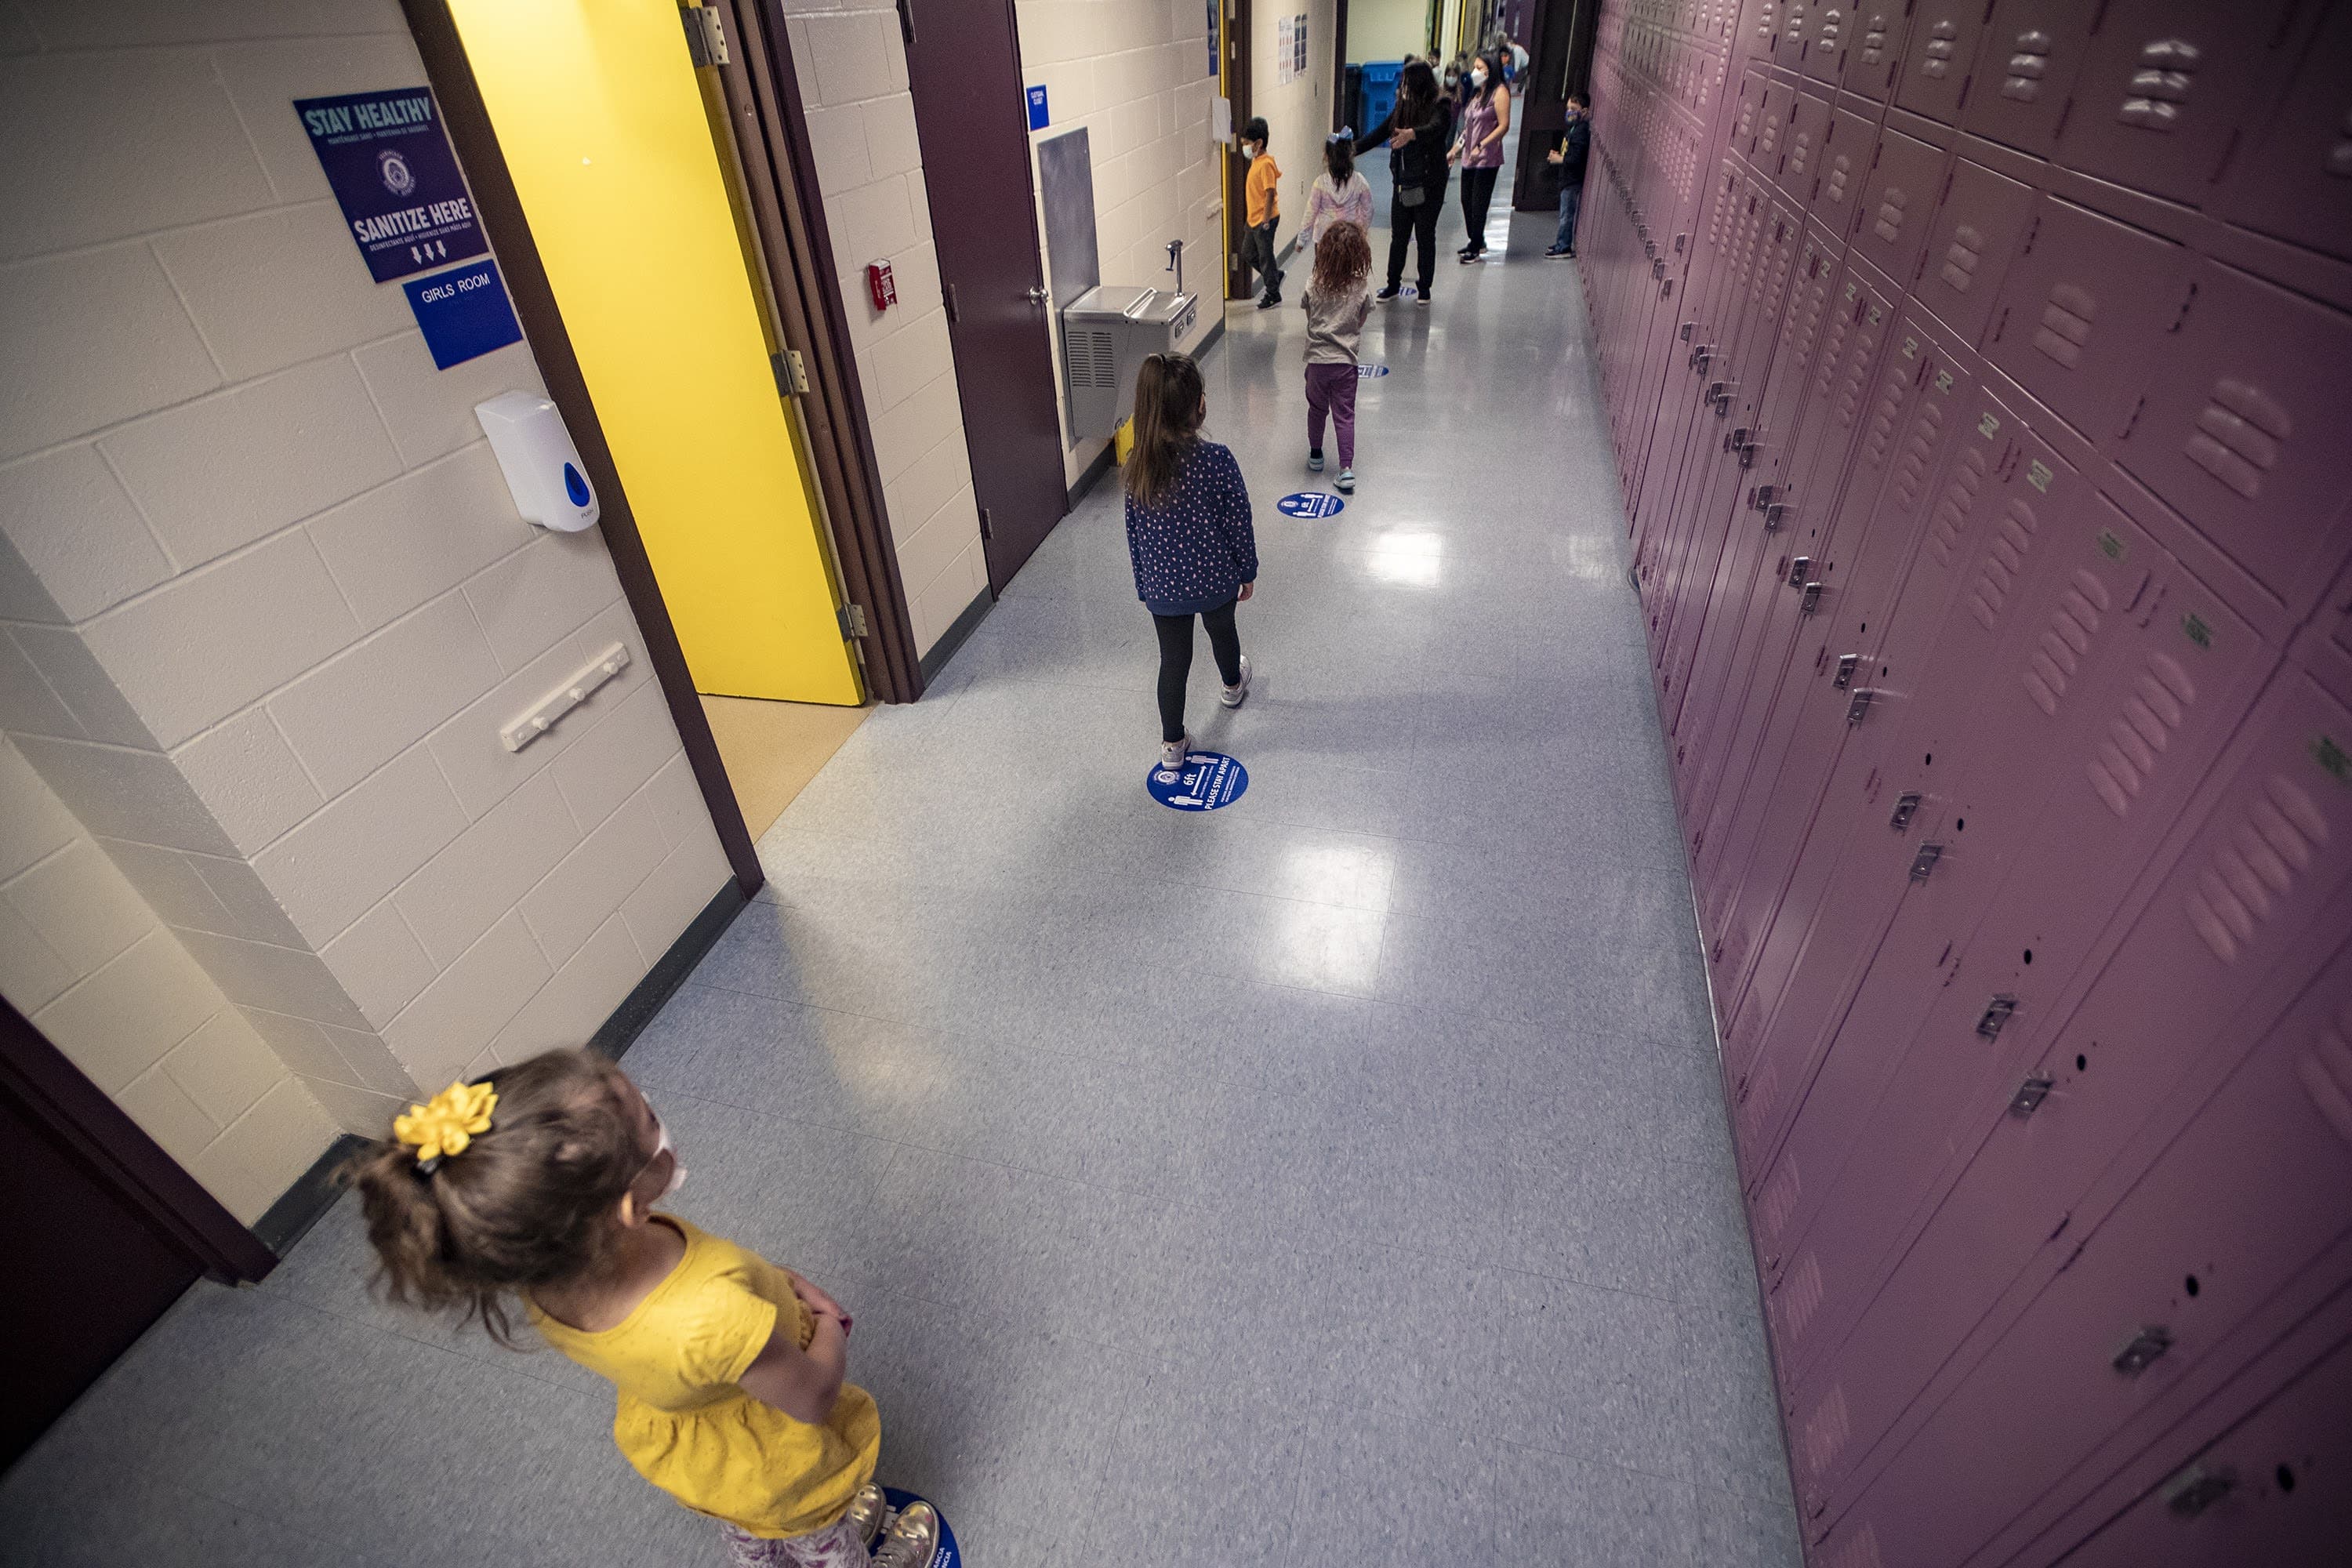 Students maintain six feet of distancing during a bathroom break at Barbieri Elementary School in Framingham. (Jesse Costa/WBUR)